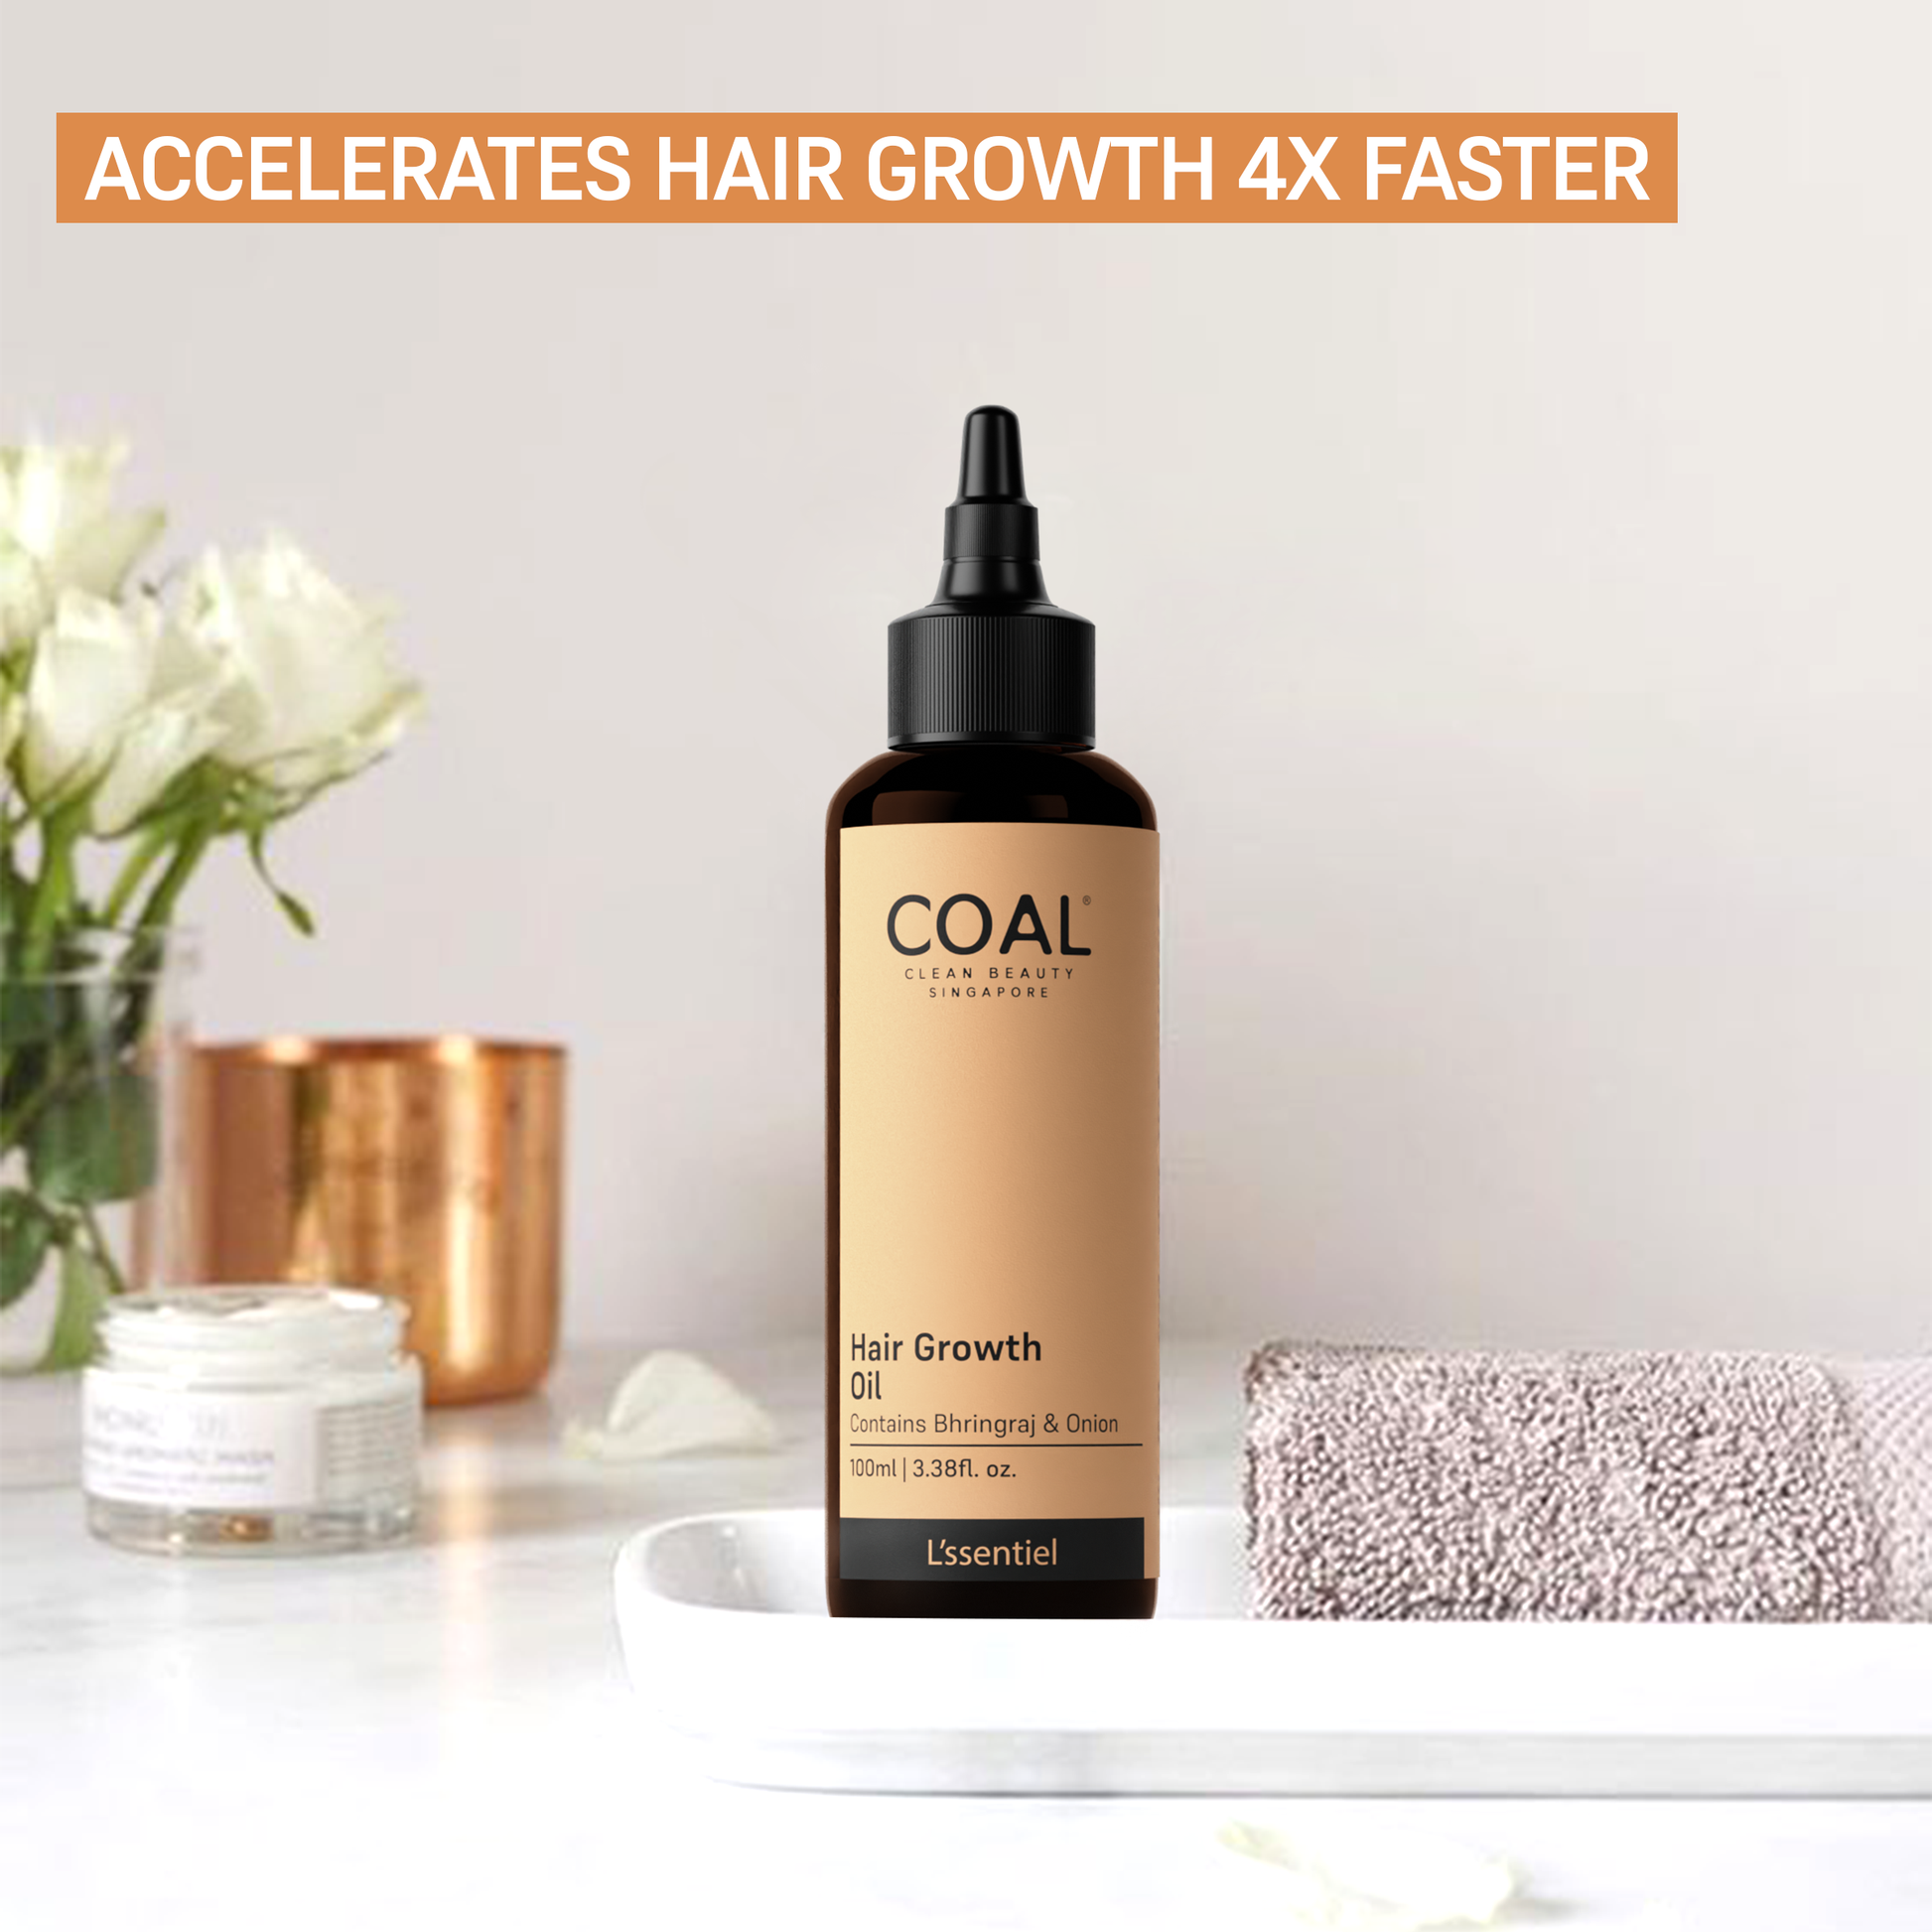 Hair Oil Combo Coal Clean Beauty